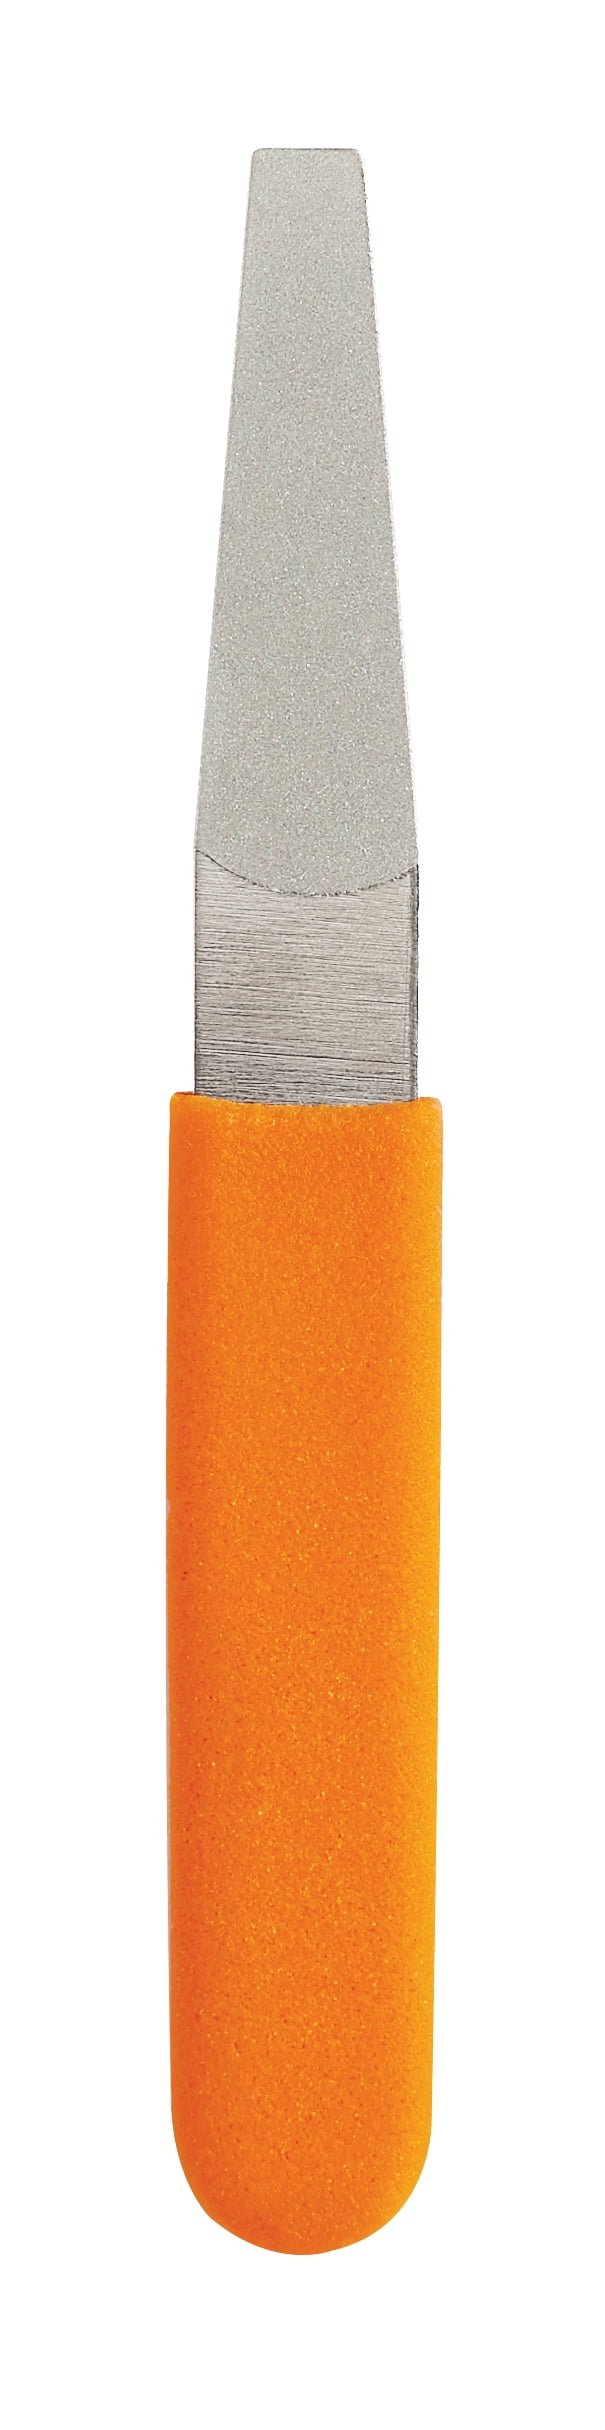 Fiskars Blade Sharpener, 6 in. Diamond Coated, Orange 